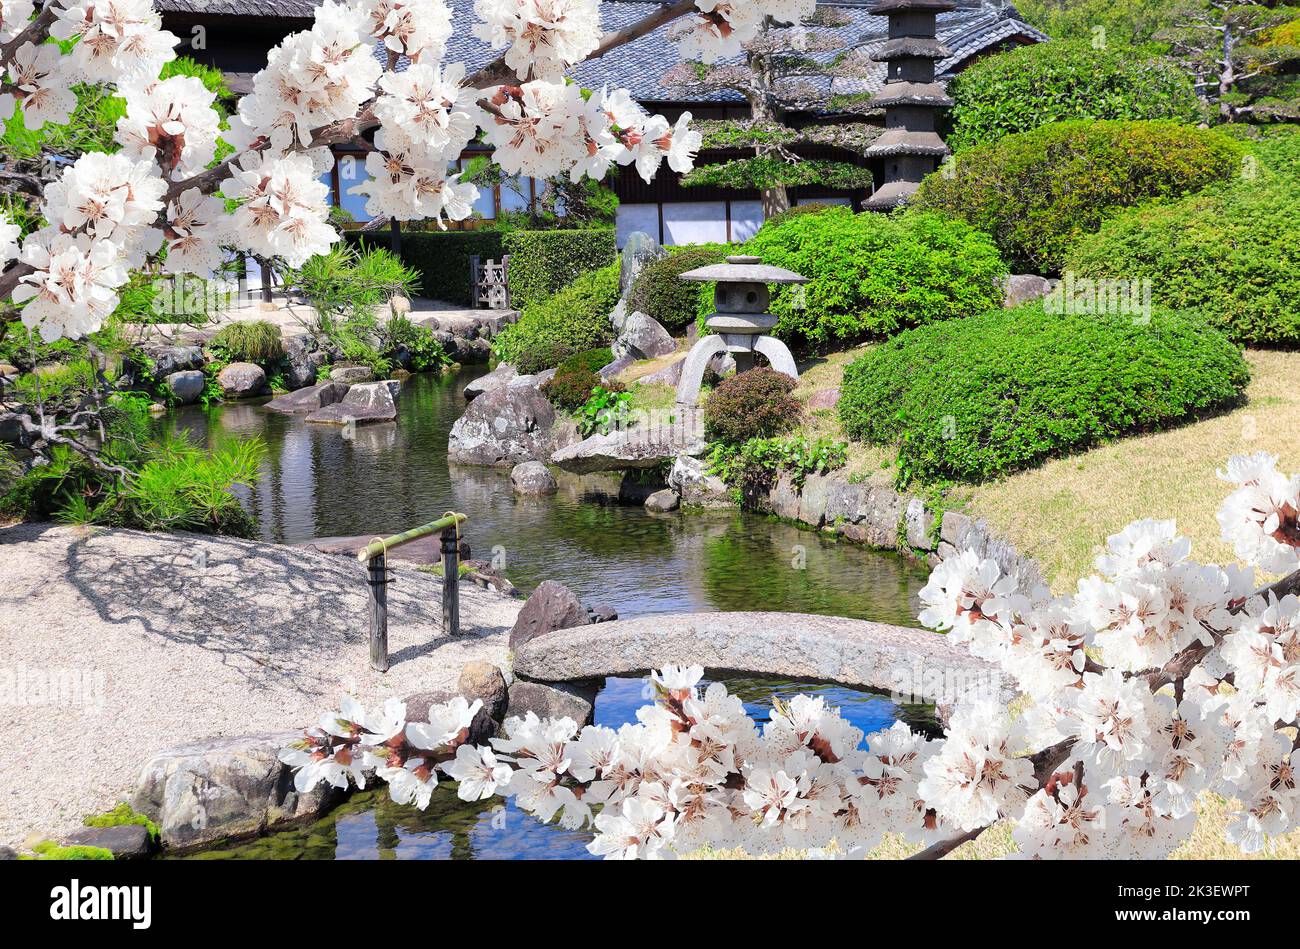 Decorative pond, bridge and blooming sakura branches in Koishikawa Korakuen garden, Okayama, Japan. Sakura blossom season. Cherry blooming season in A Stock Photo